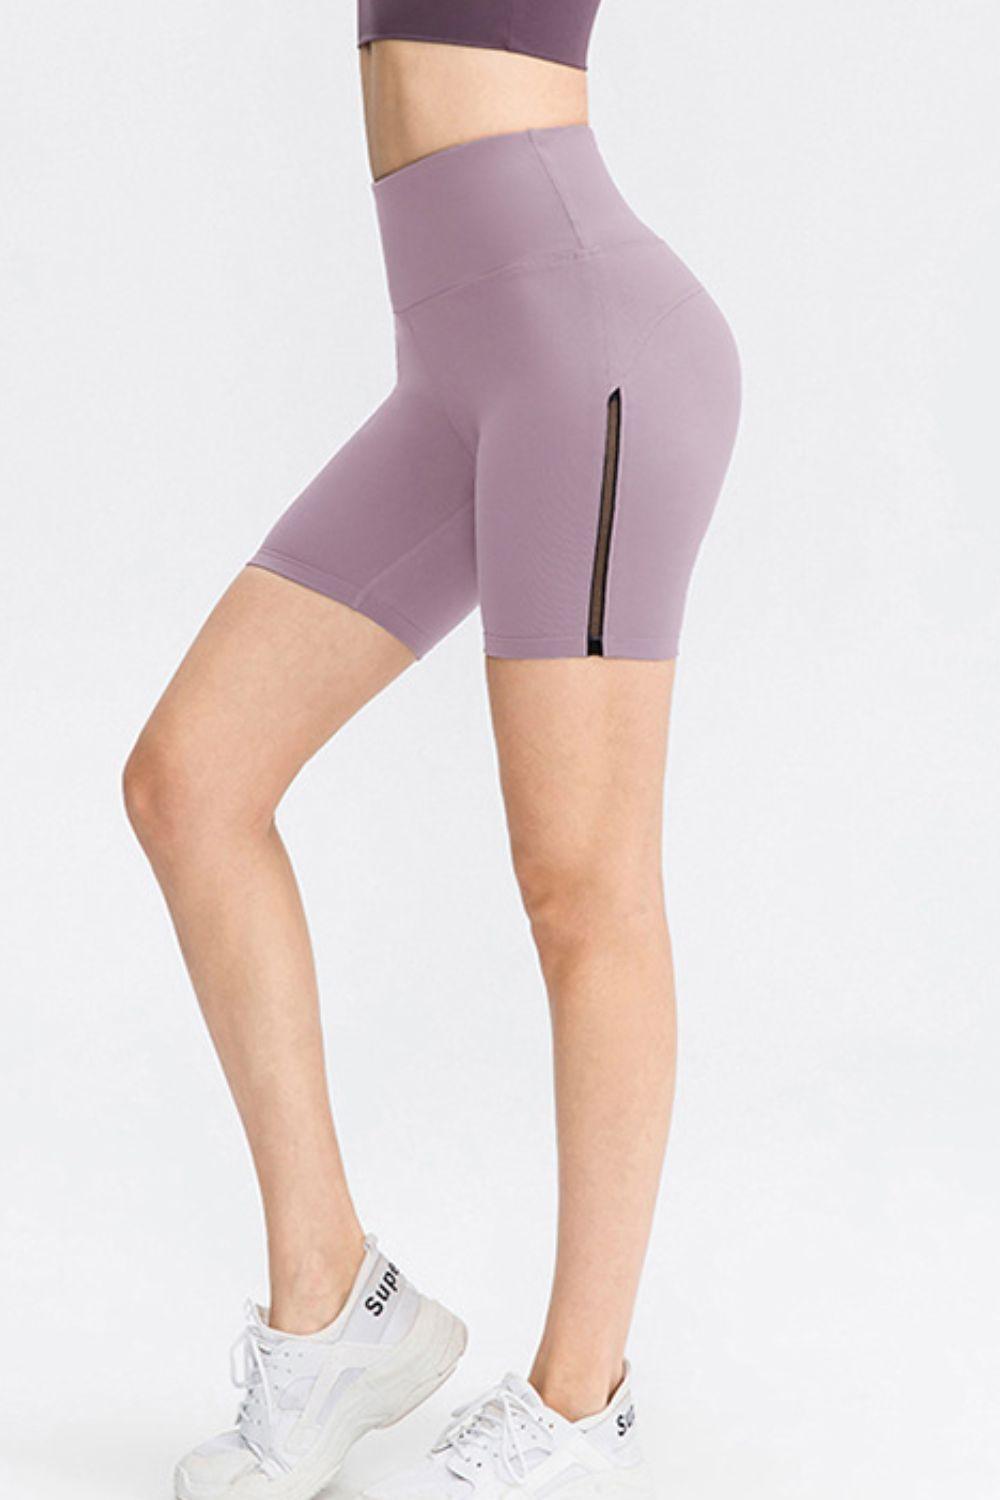 Super Flex Spandex Slim Fit Gym Shorts - MXSTUDIO.COM